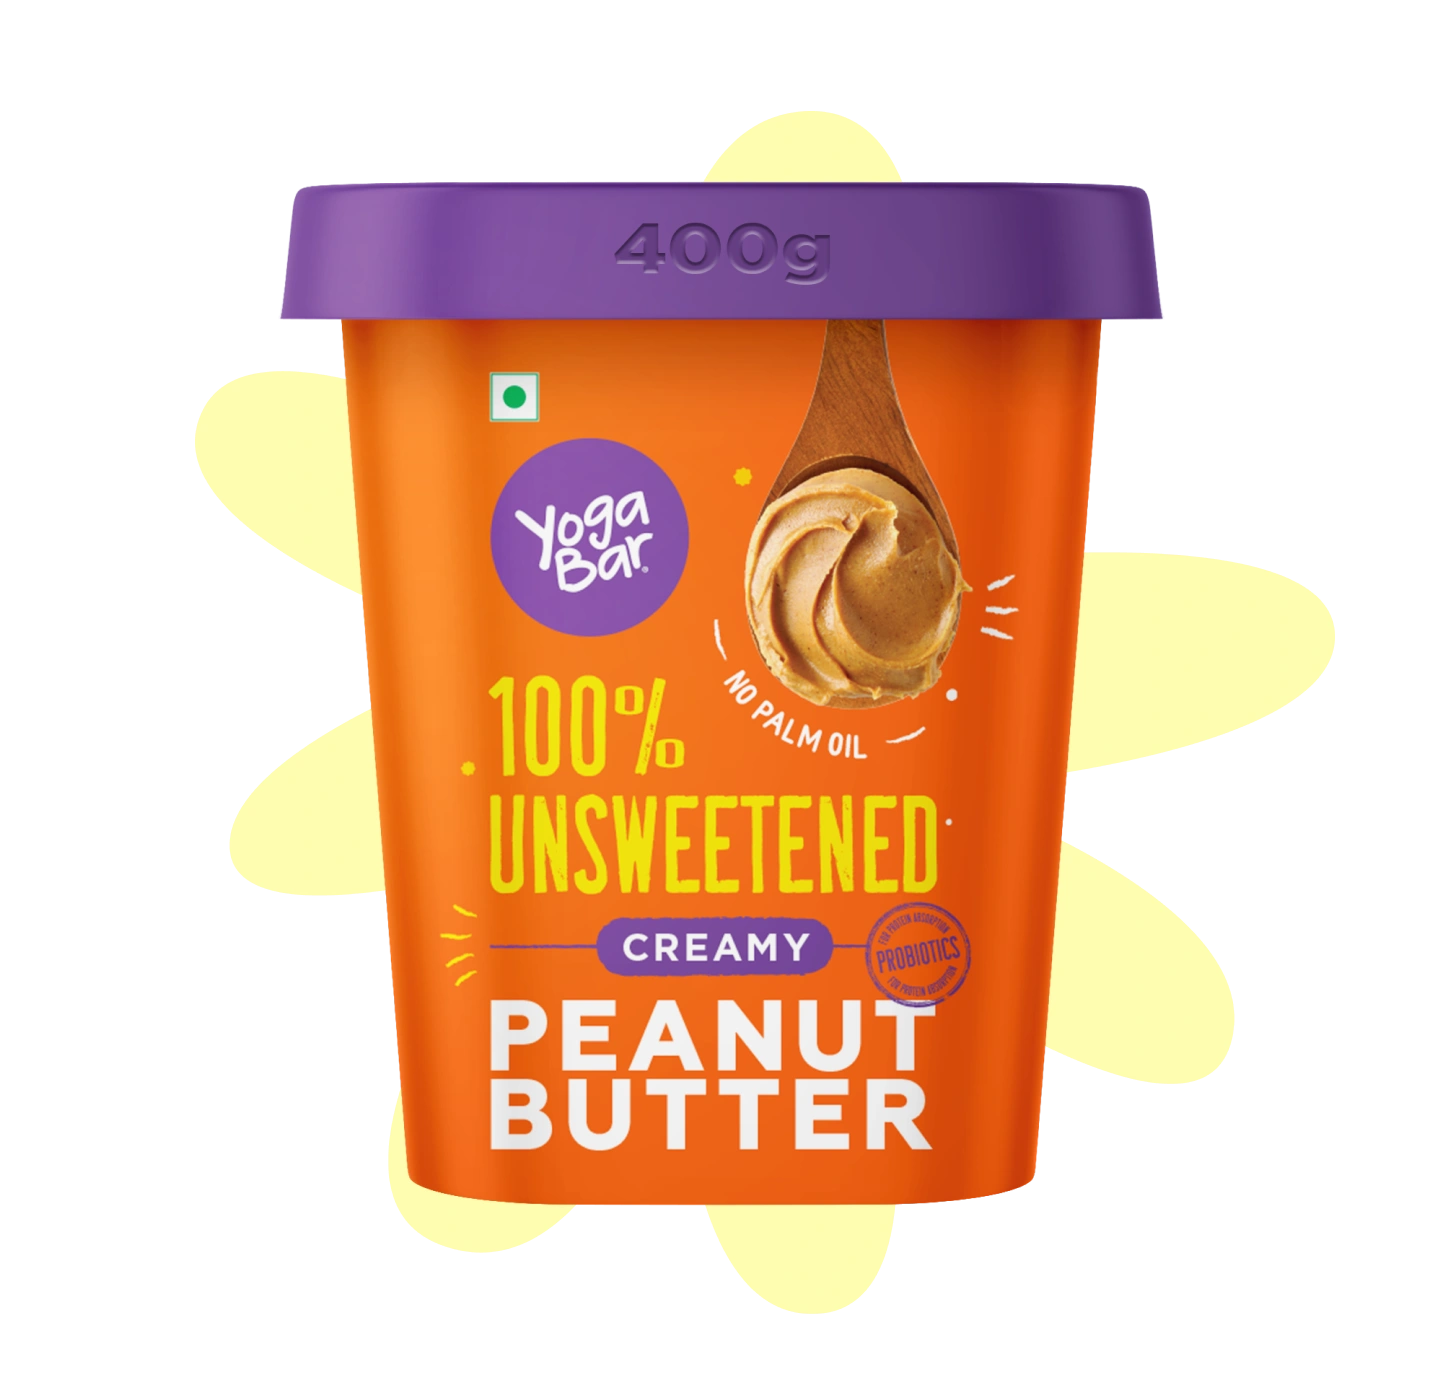 Creamy 100% Unsweetened Peanut Butter 400g – Yoga Bars